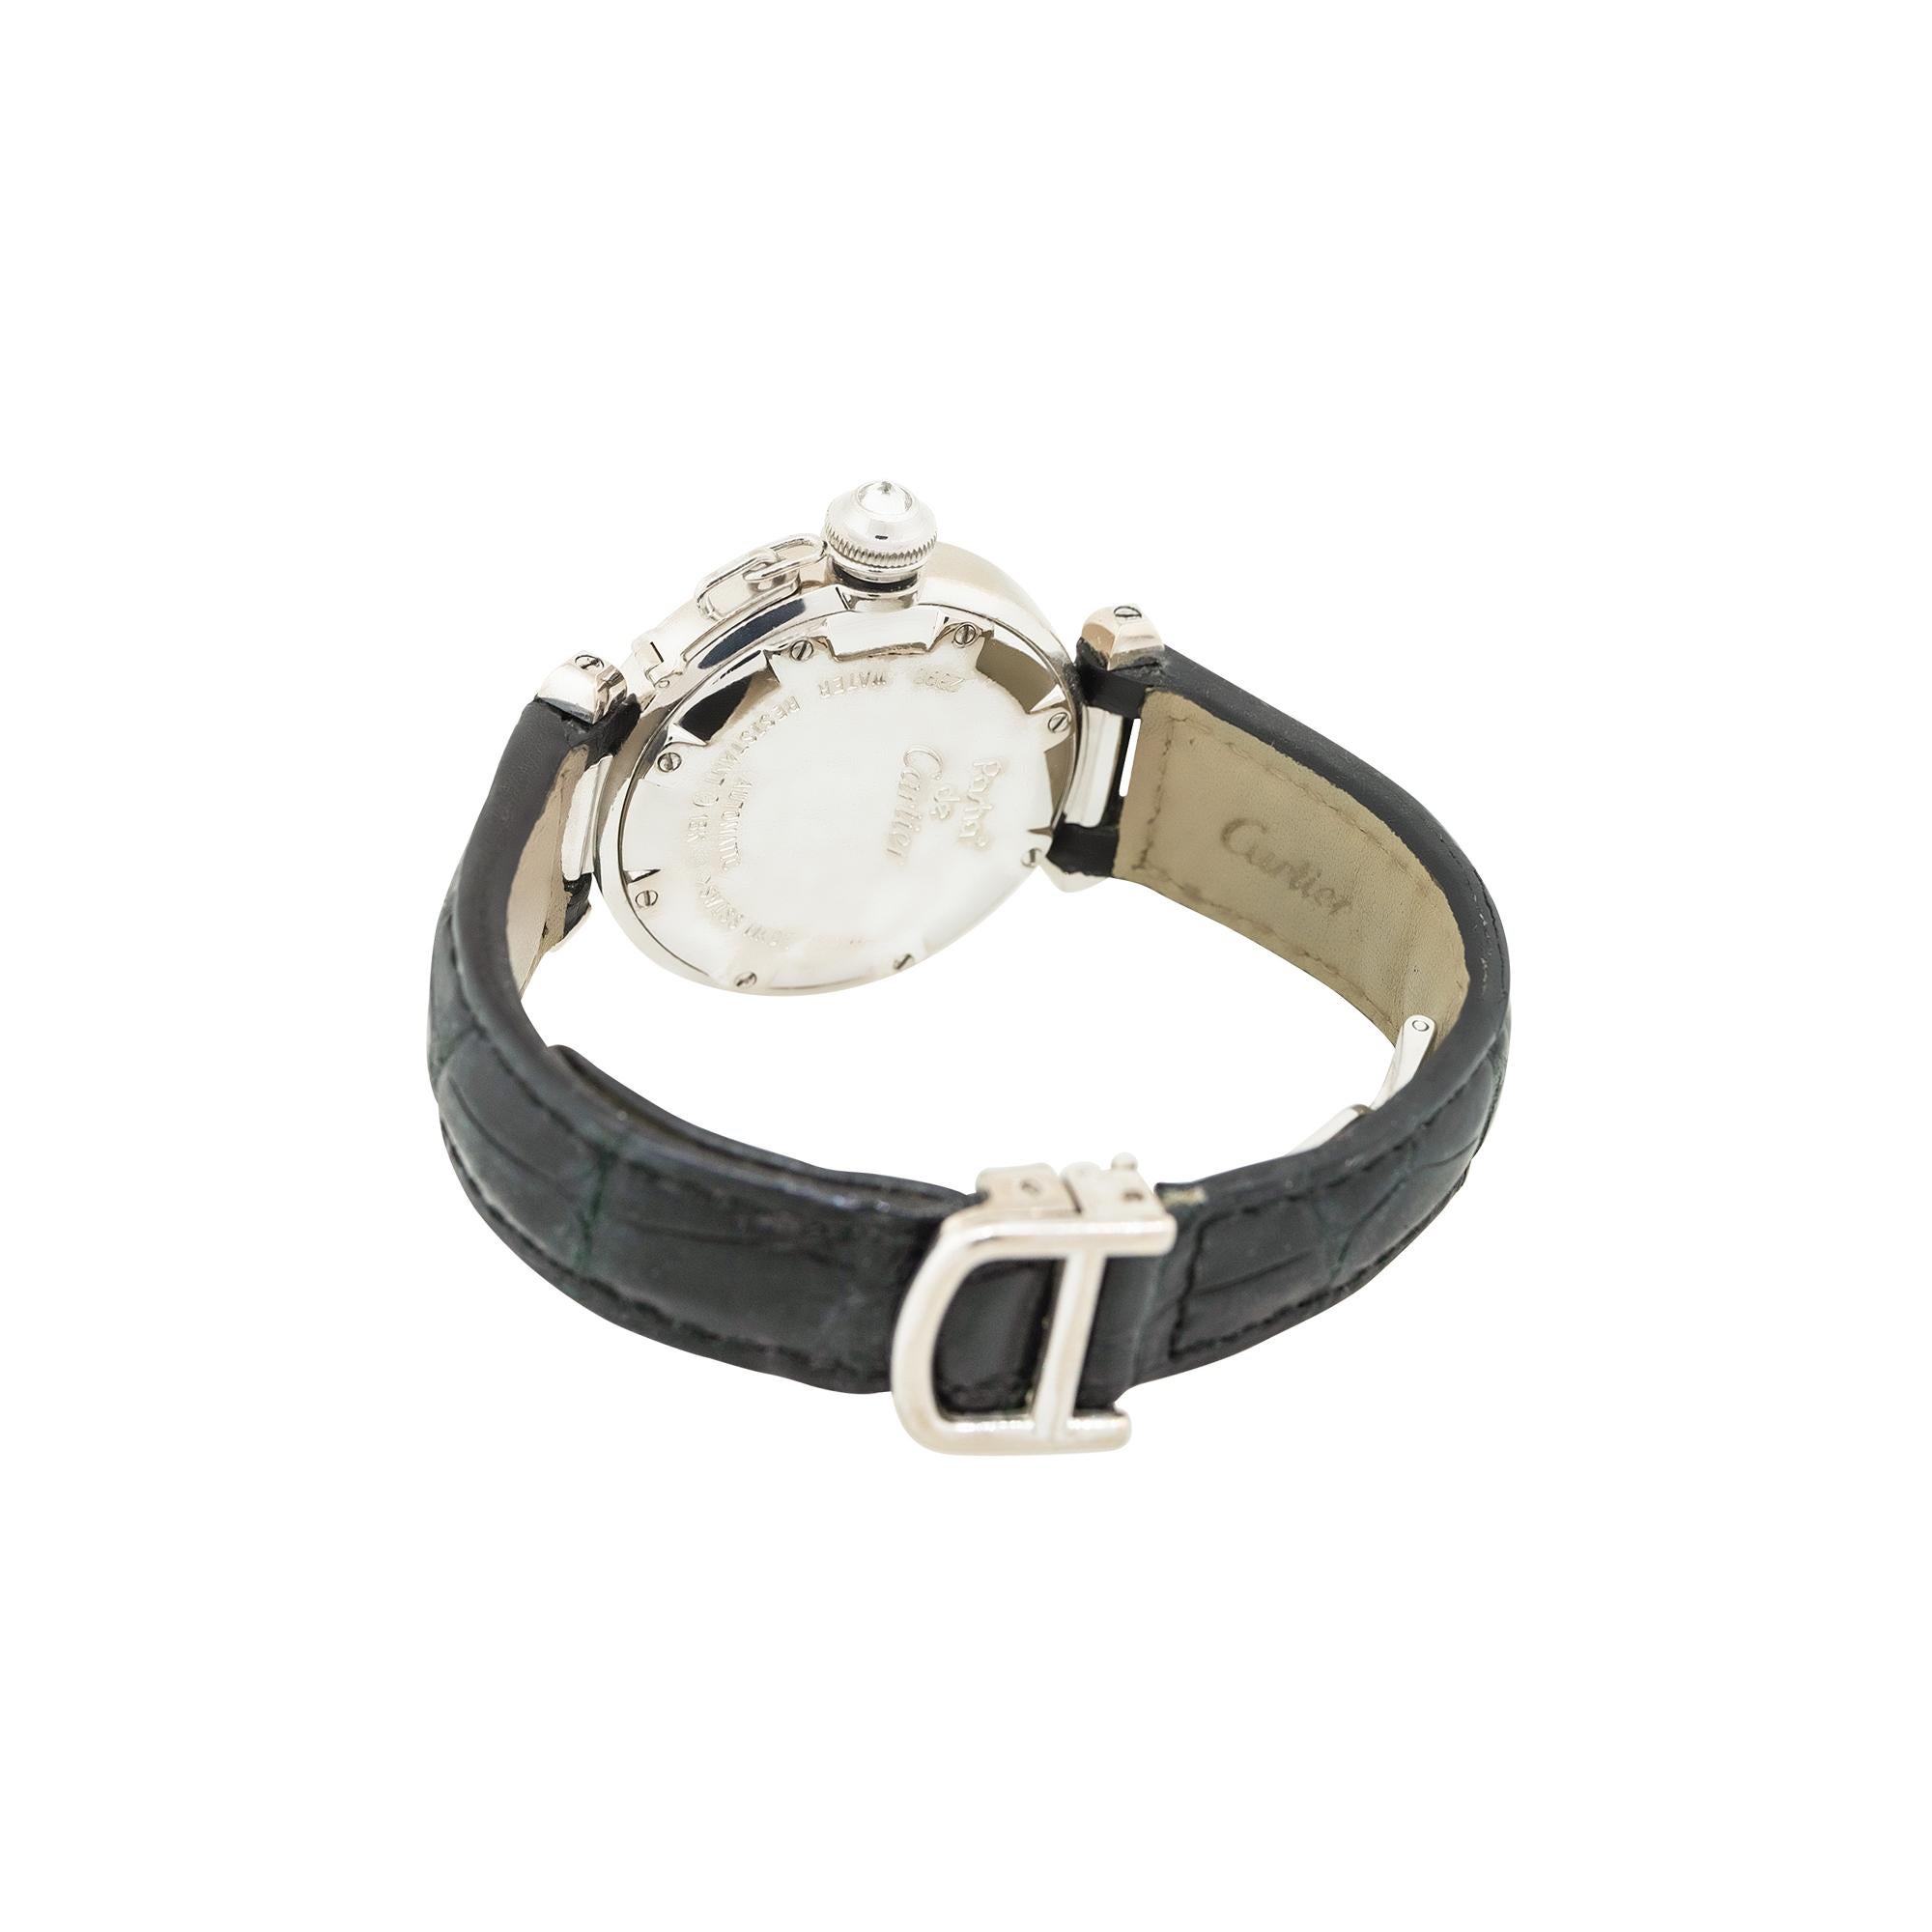 Women's or Men's Cartier 2398 Pasha White Gold Watch 18 Karat on Black Leather in Stock